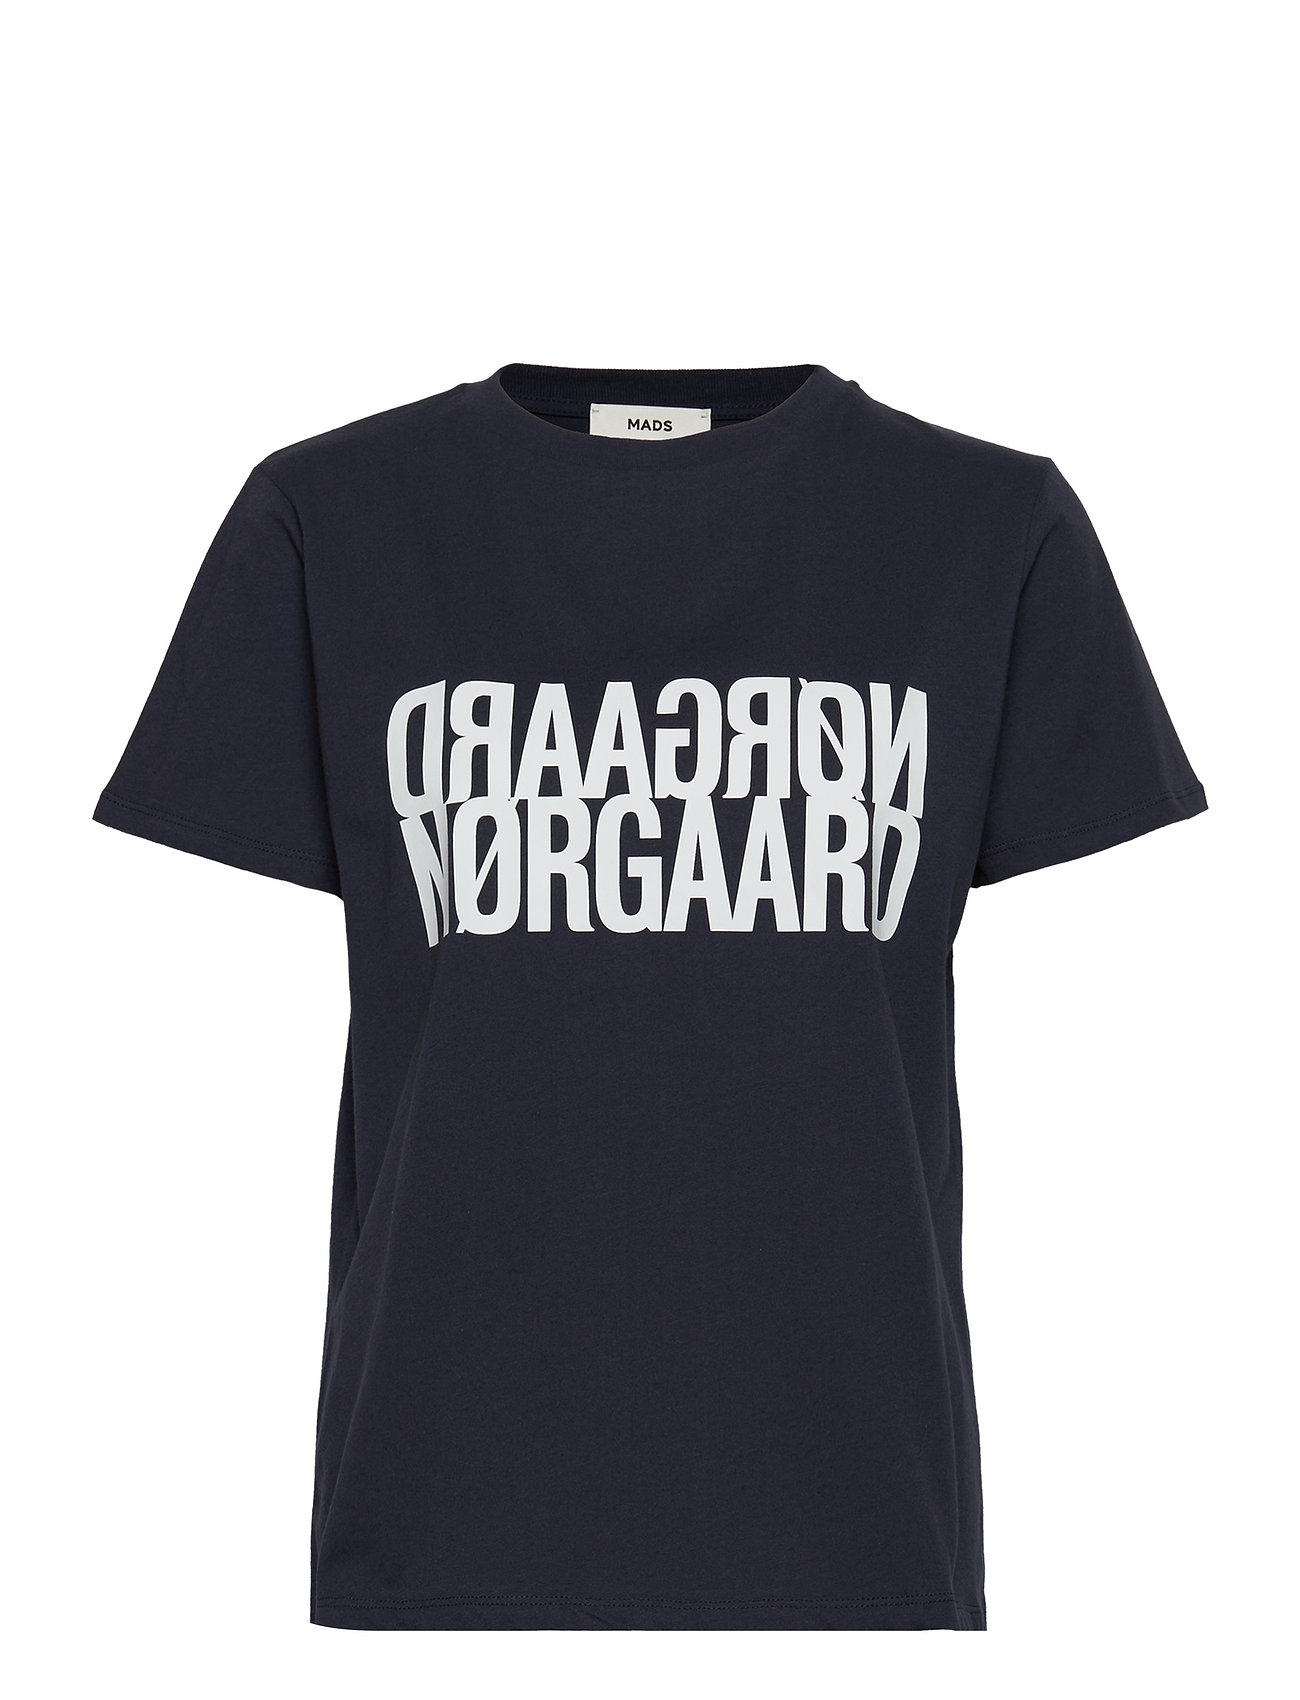 Single Organic Trenda P Tee Tops T-shirts & Tops Short-sleeved Navy Mads Nørgaard